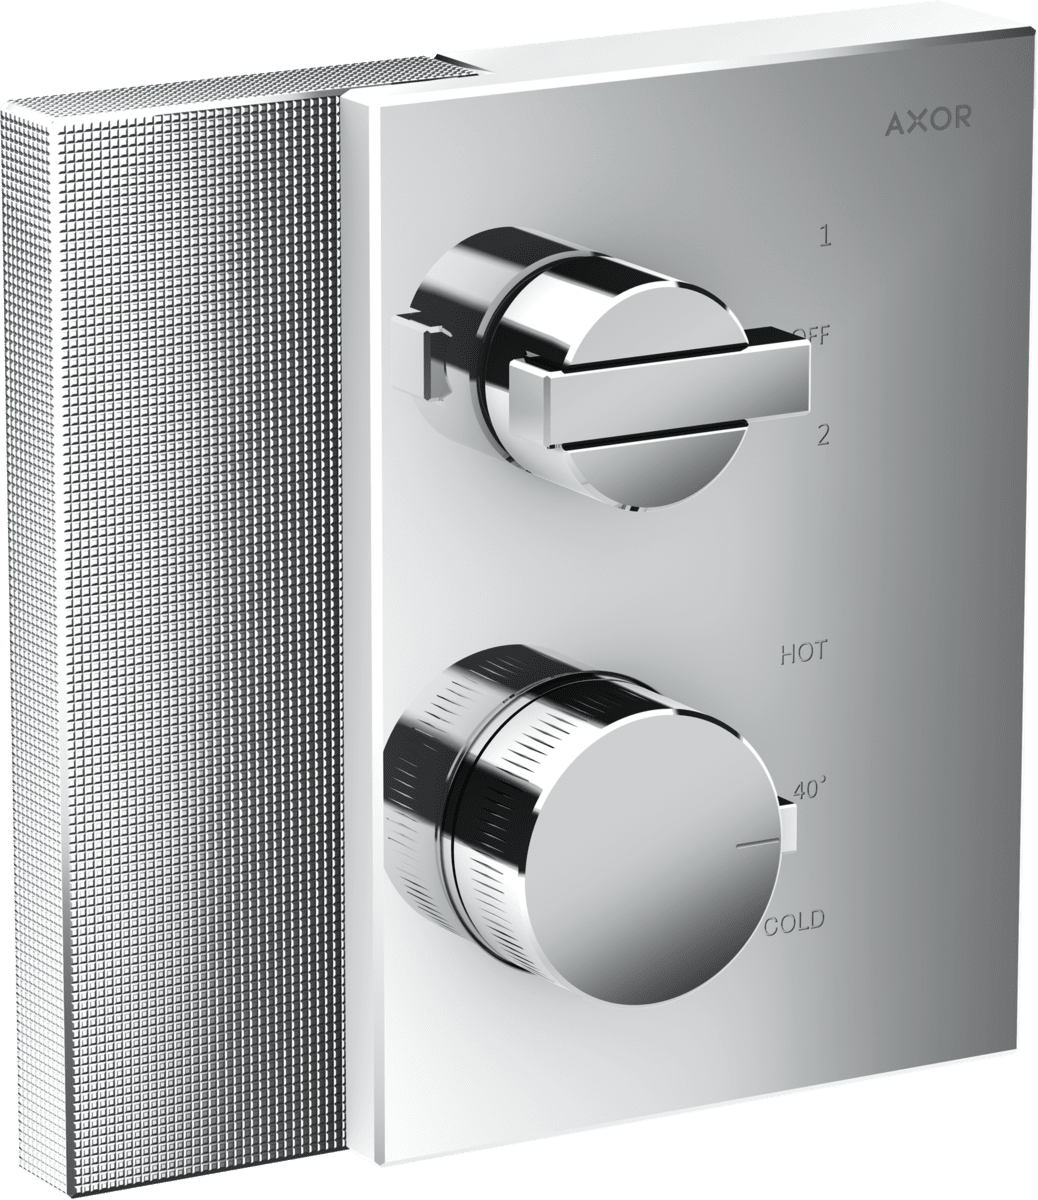 HANSGROHE AXOR Edge Termostat ankastre montaj açma kapama/yönlendirme valfi ile #46761000 - Krom resmi